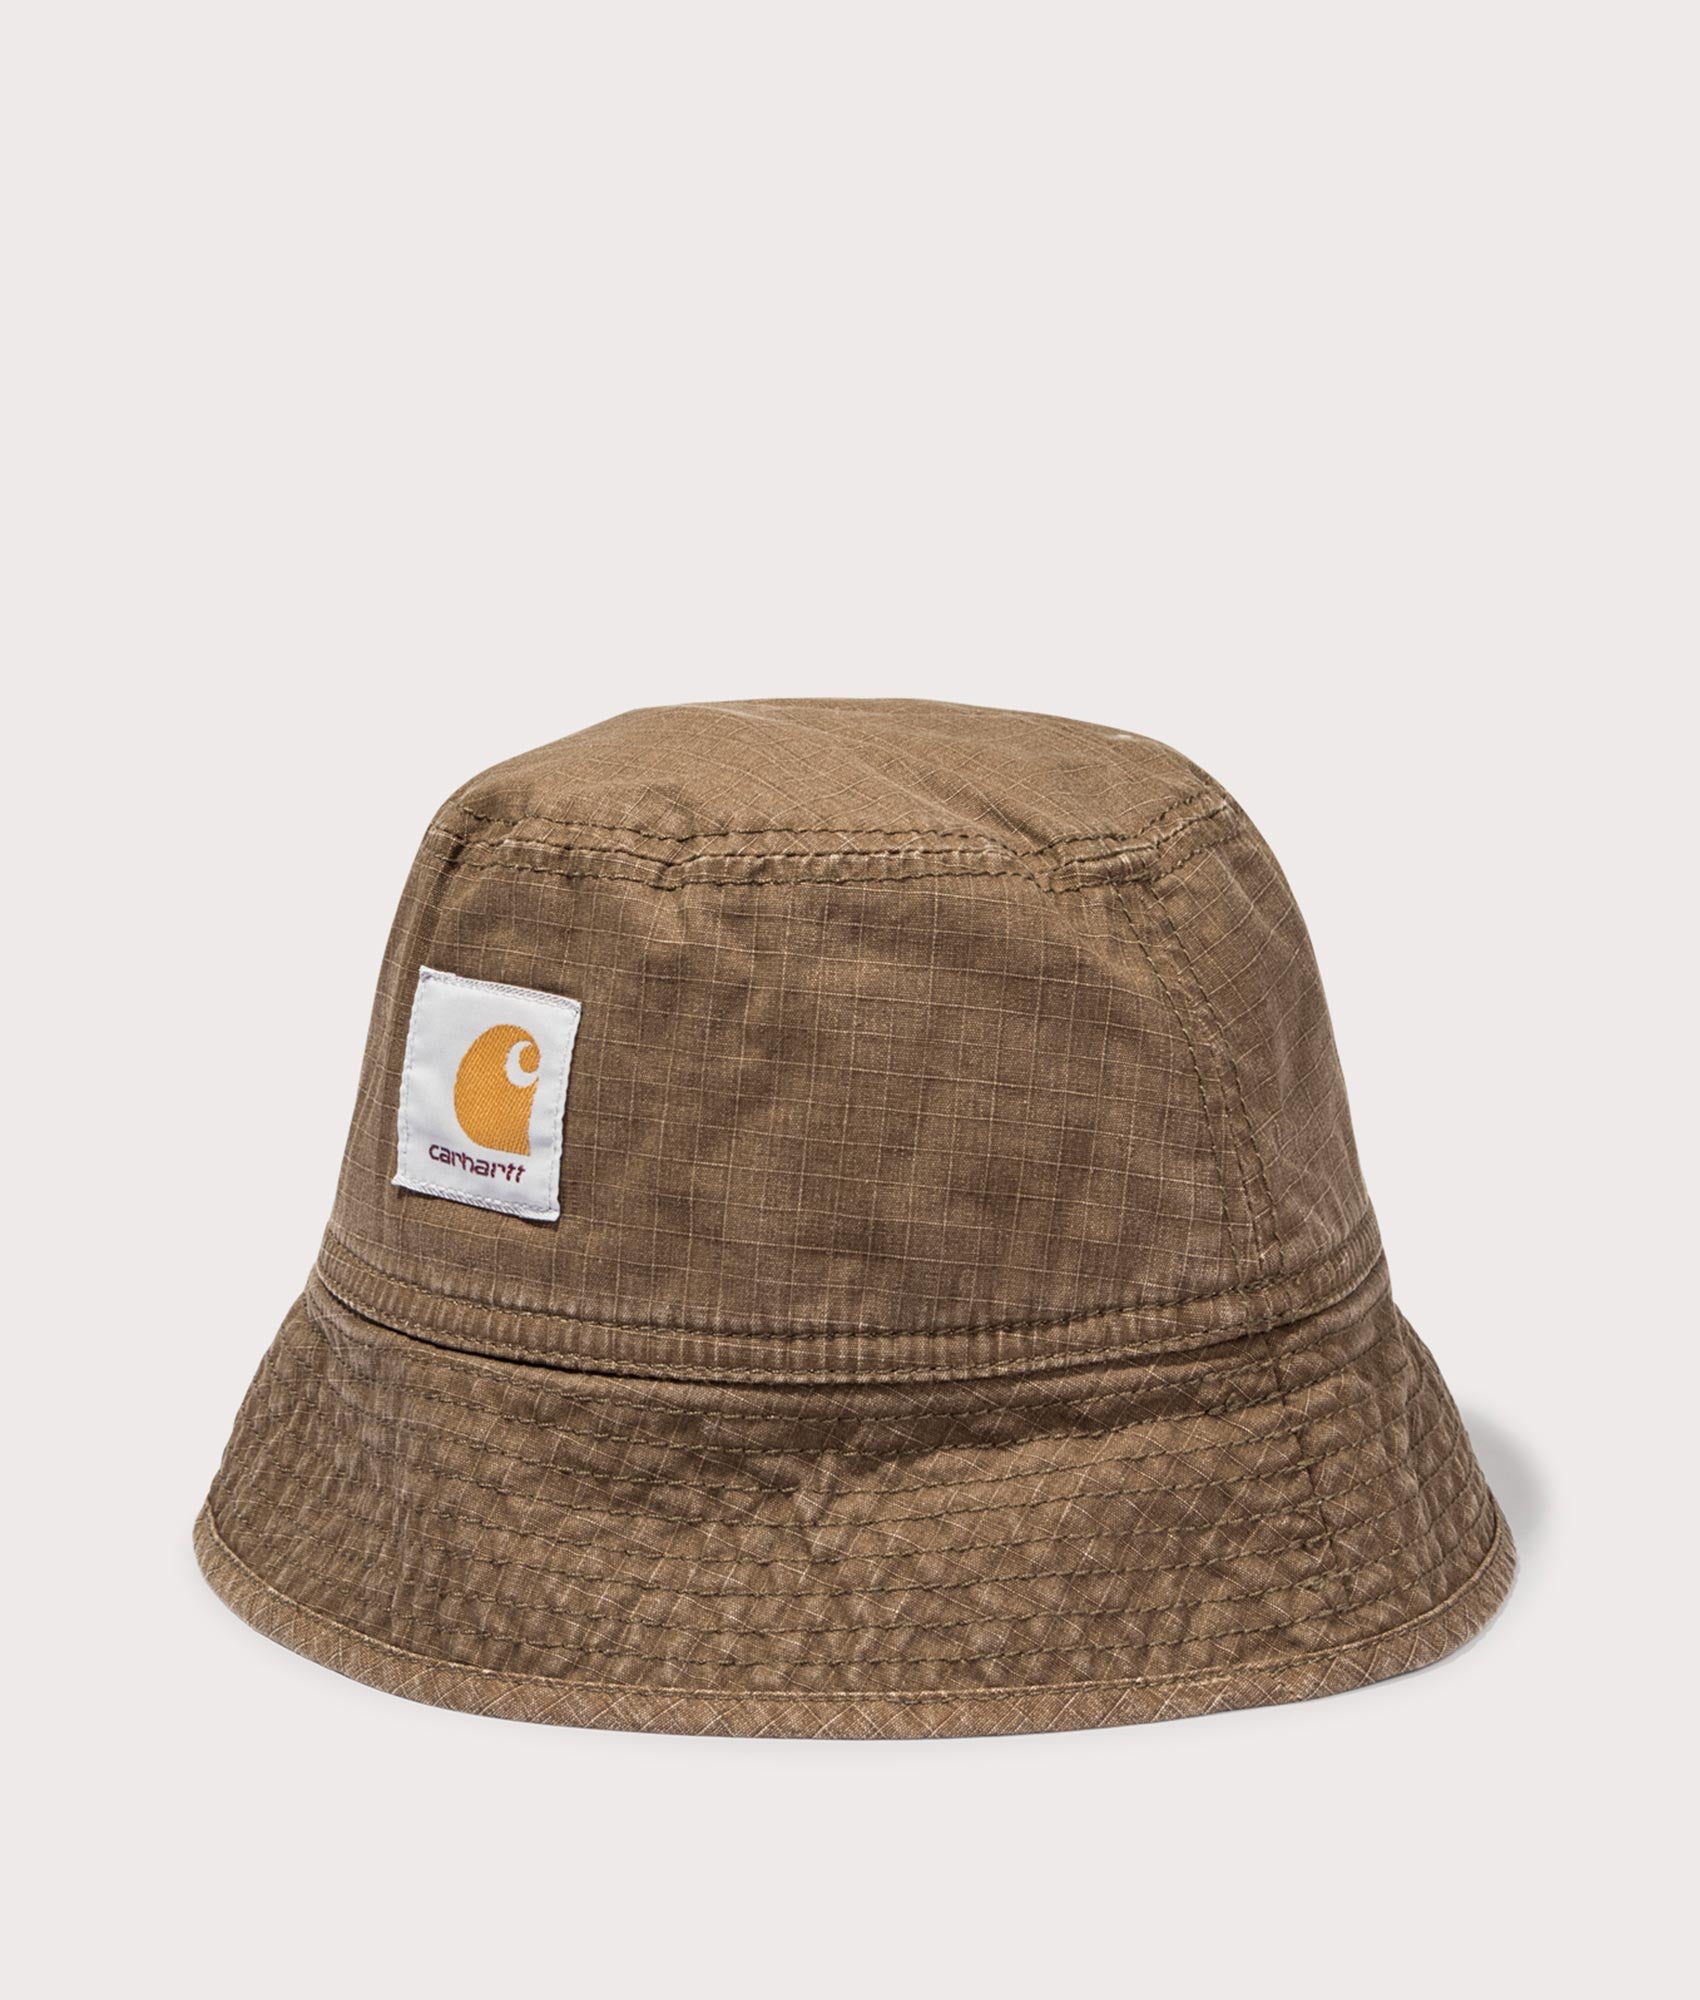 Carhartt WIP Wynton Bucket Hat - Tamarind Dusty H Brown - Size M-L